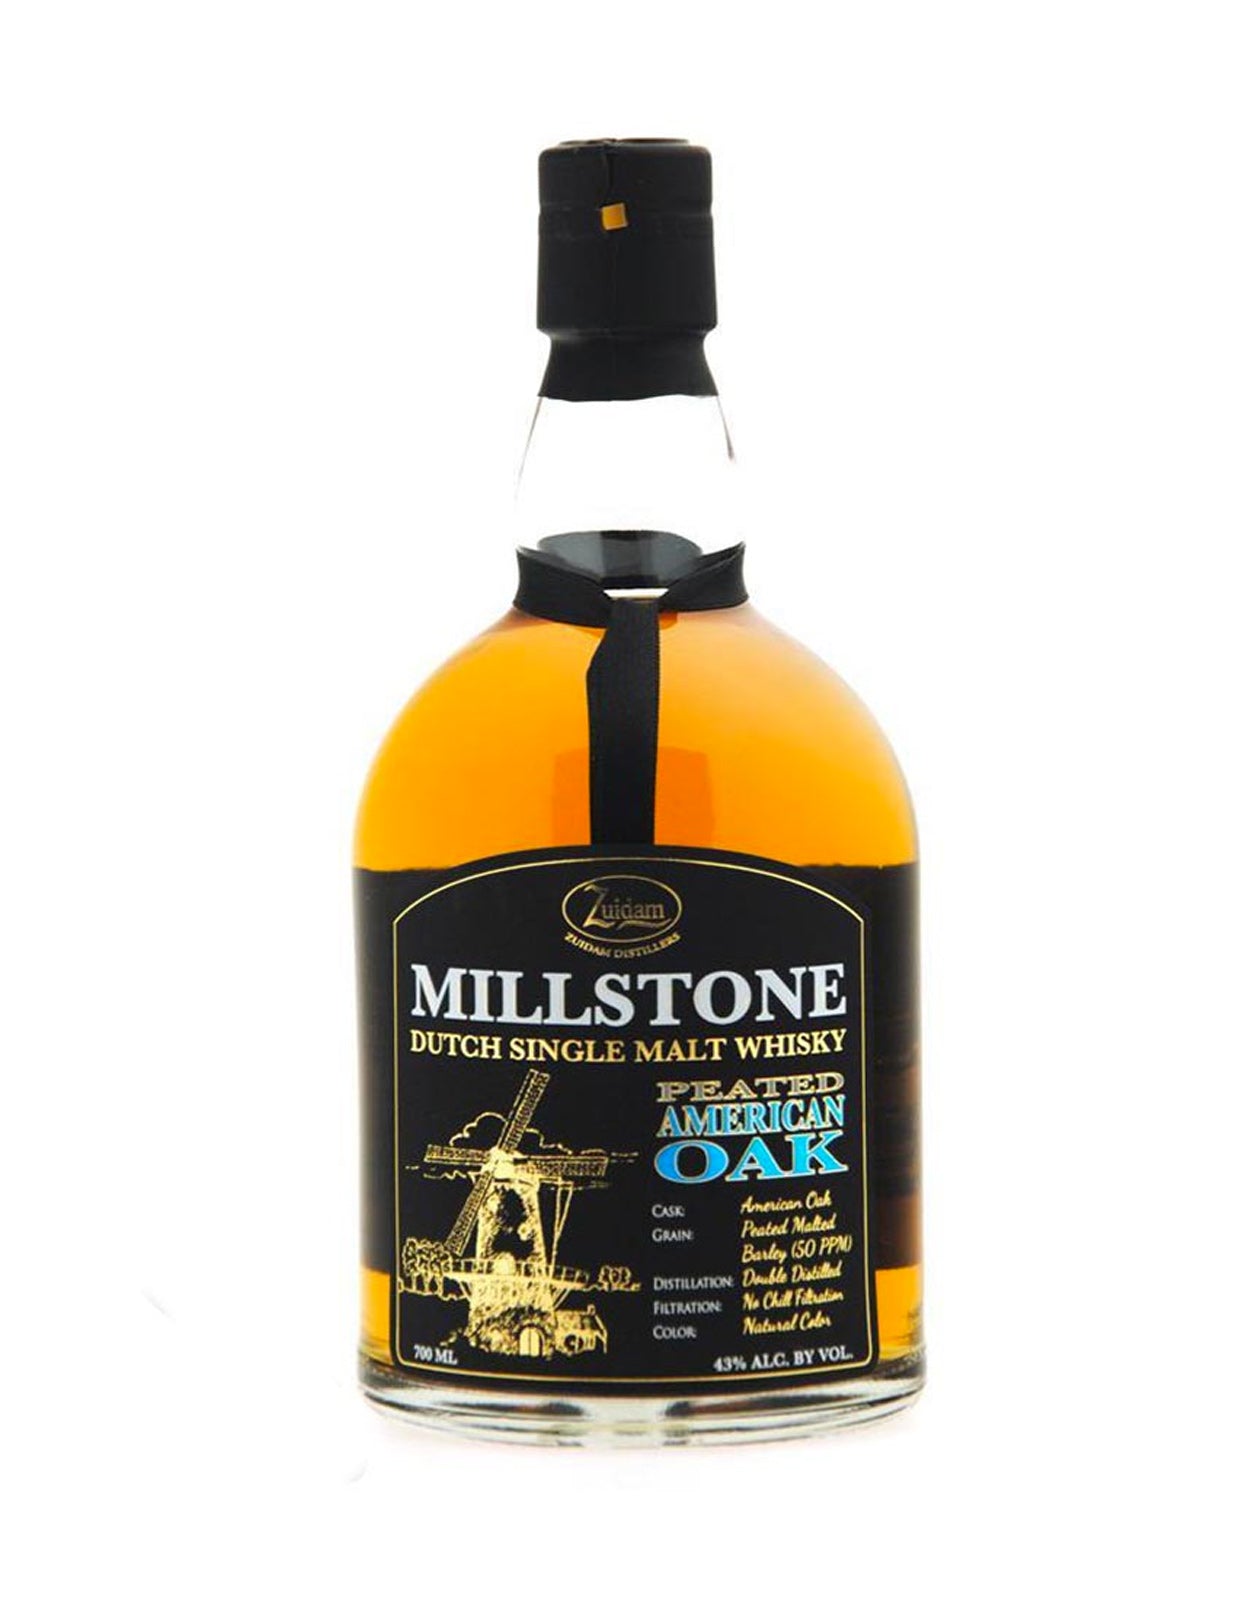 Millstone Peated American Oak Dutch Single Malt Whisky